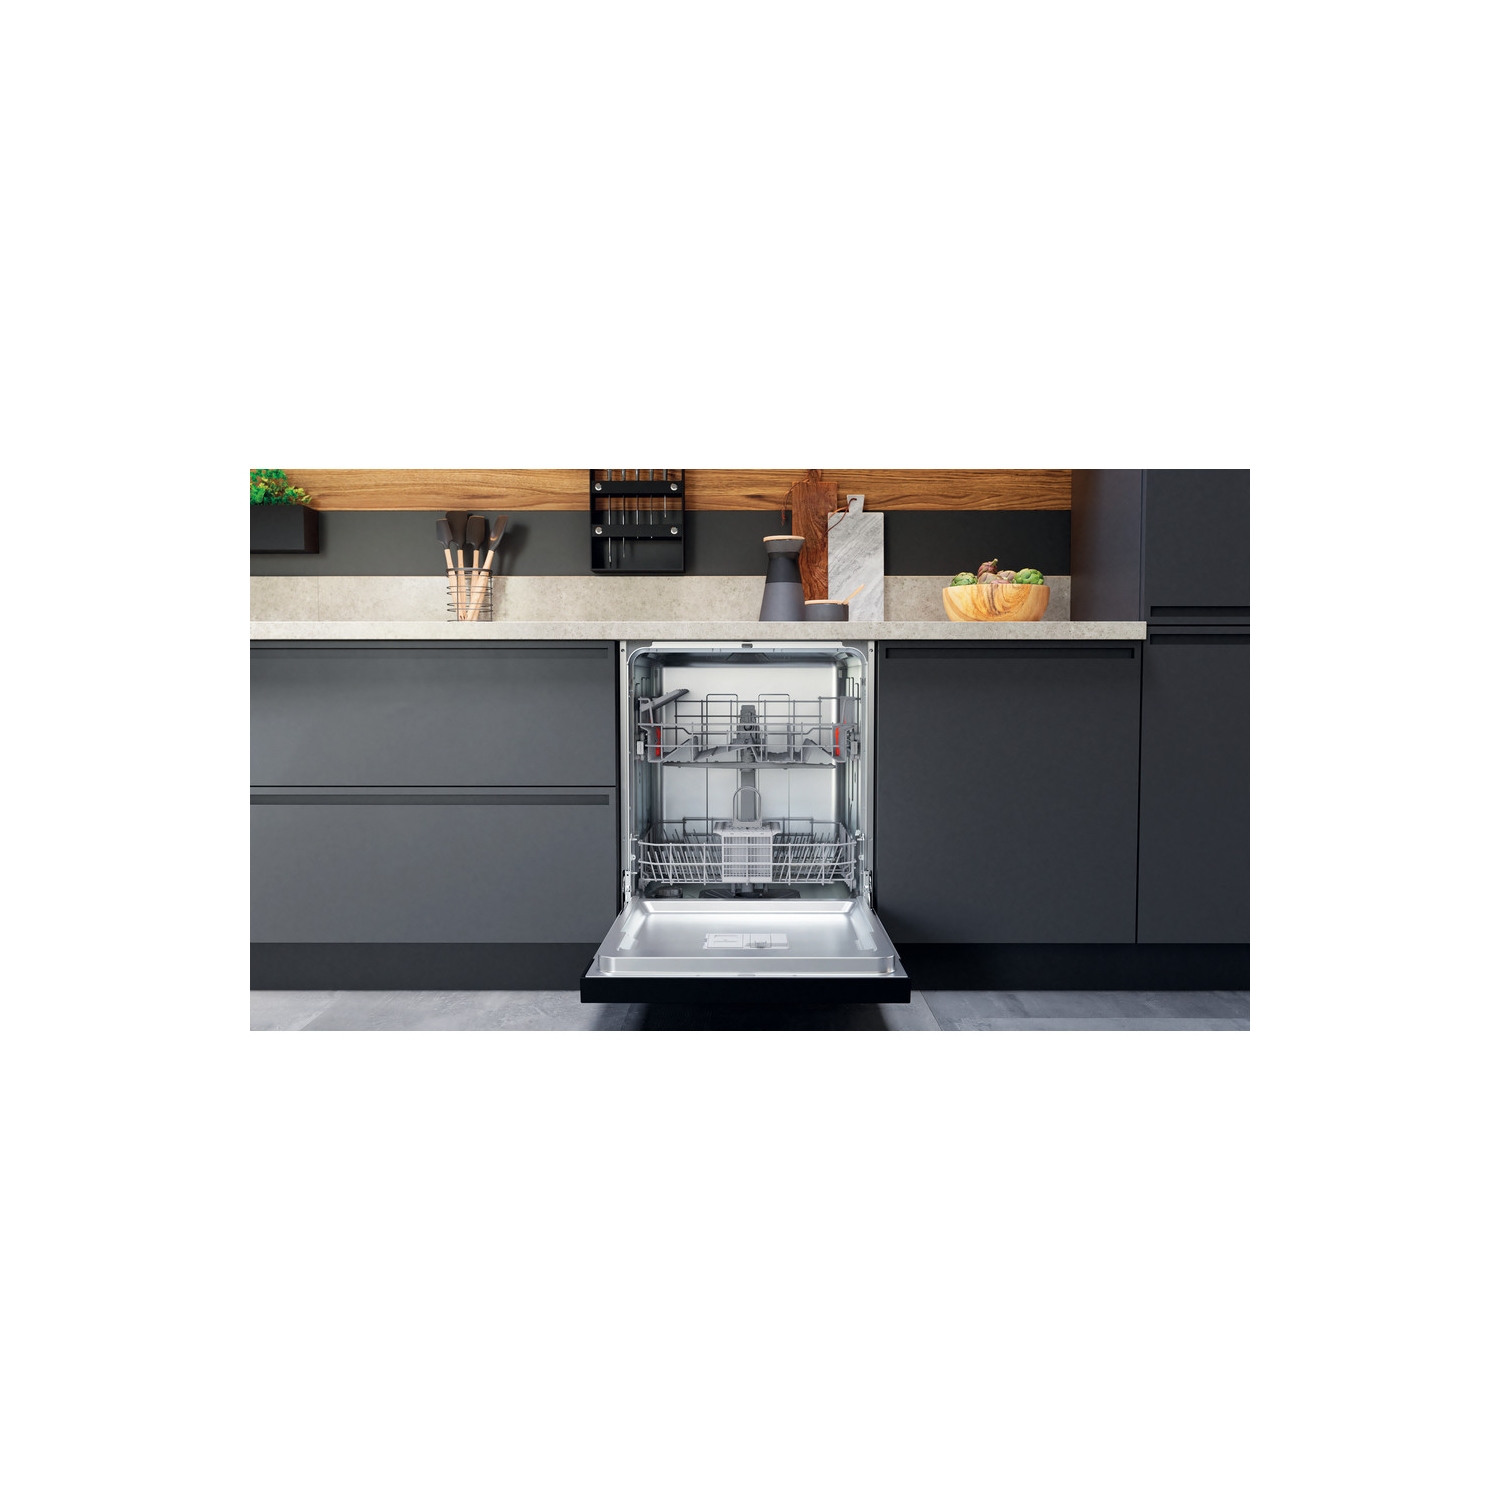 Hotpoint HBC2B19UKN Semi-Integrated Full Size Dishwasher - 13 Place Settings - 2